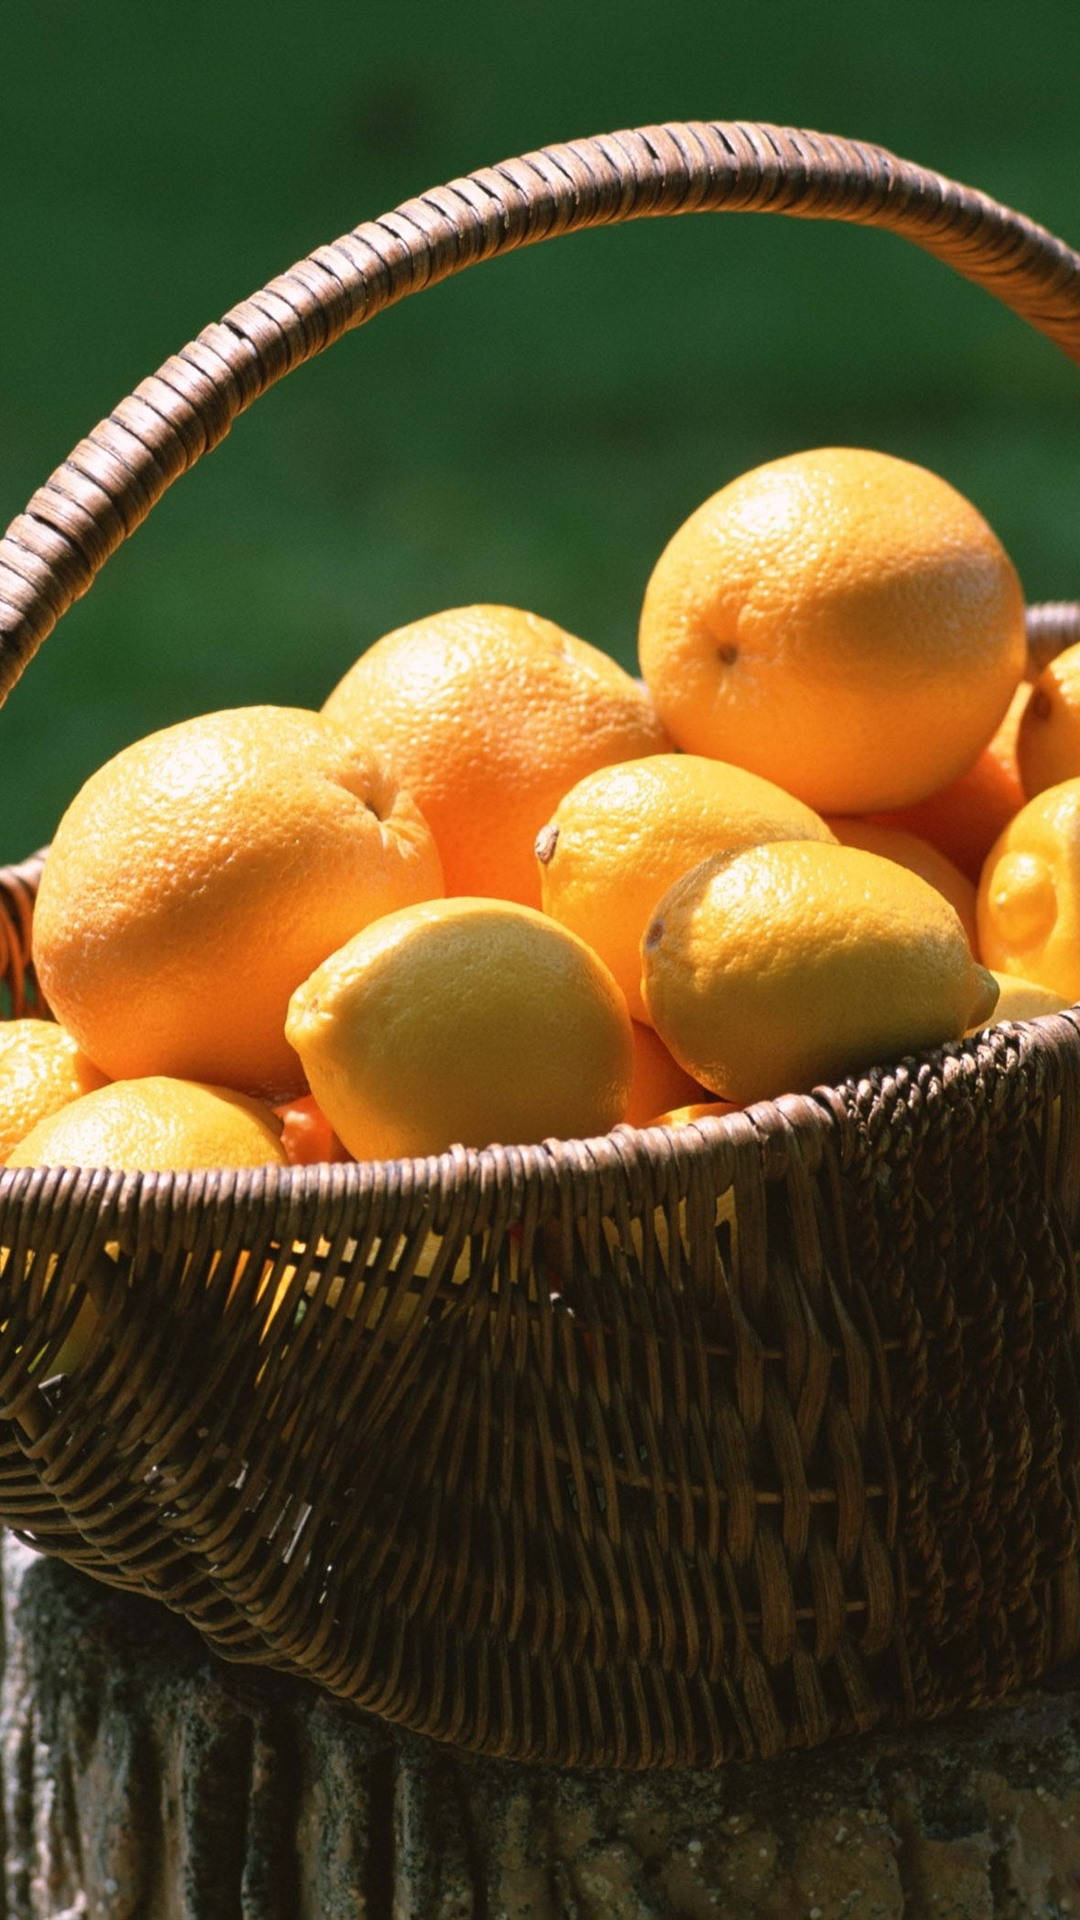 Oranges And Lemons In A Basket Background